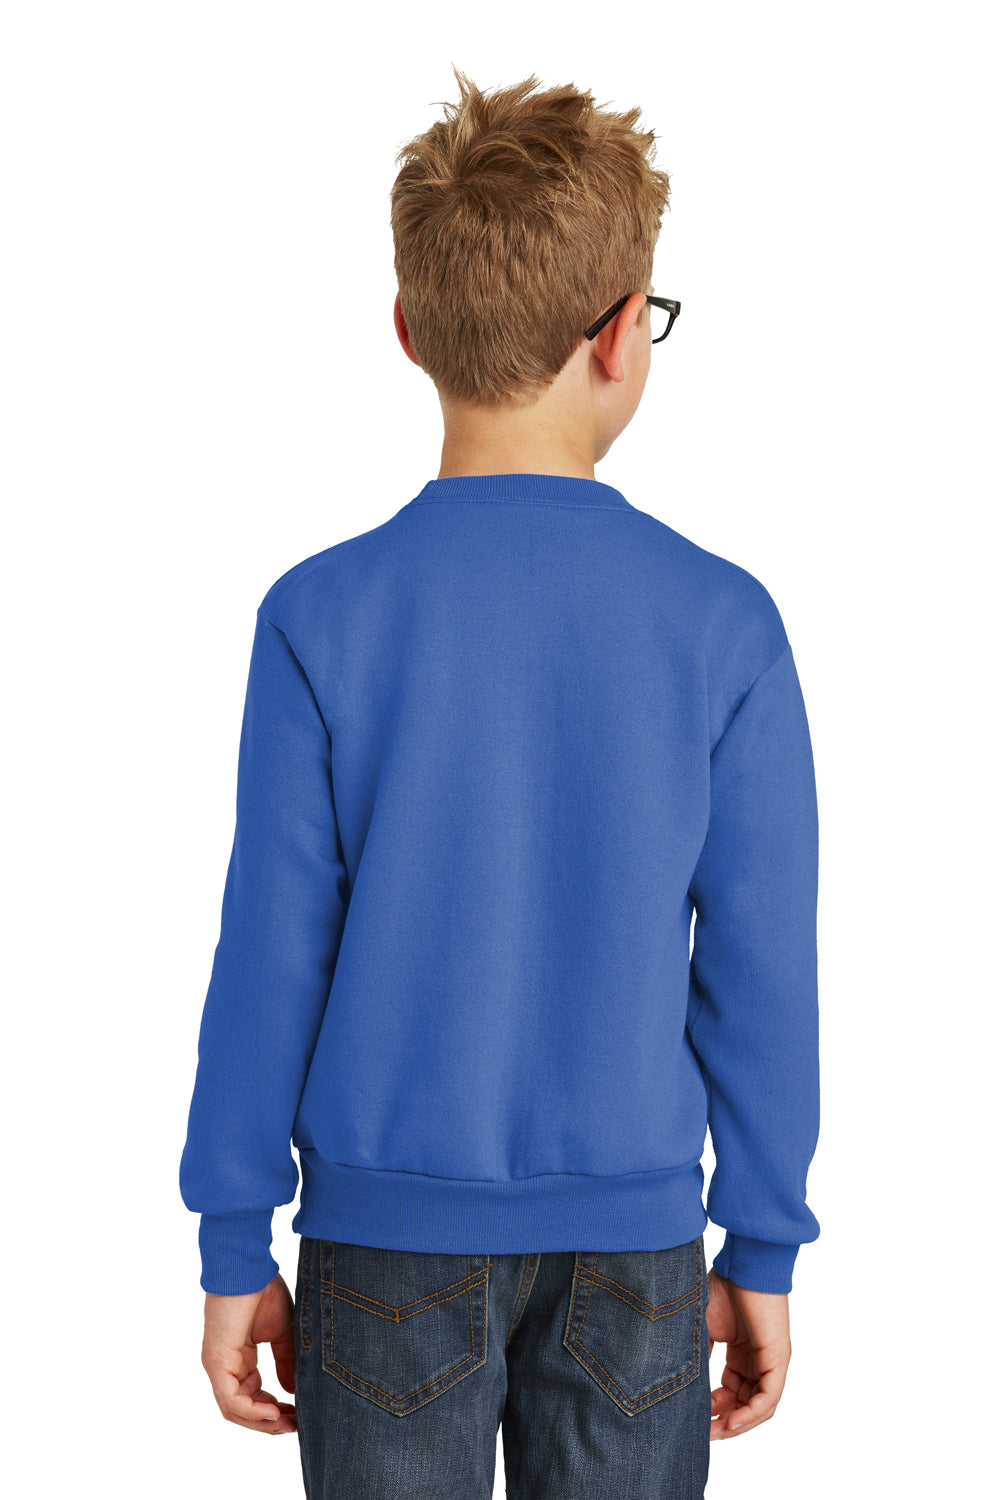 Port & Company PC90Y Youth Core Fleece Crewneck Sweatshirt Royal Blue Back